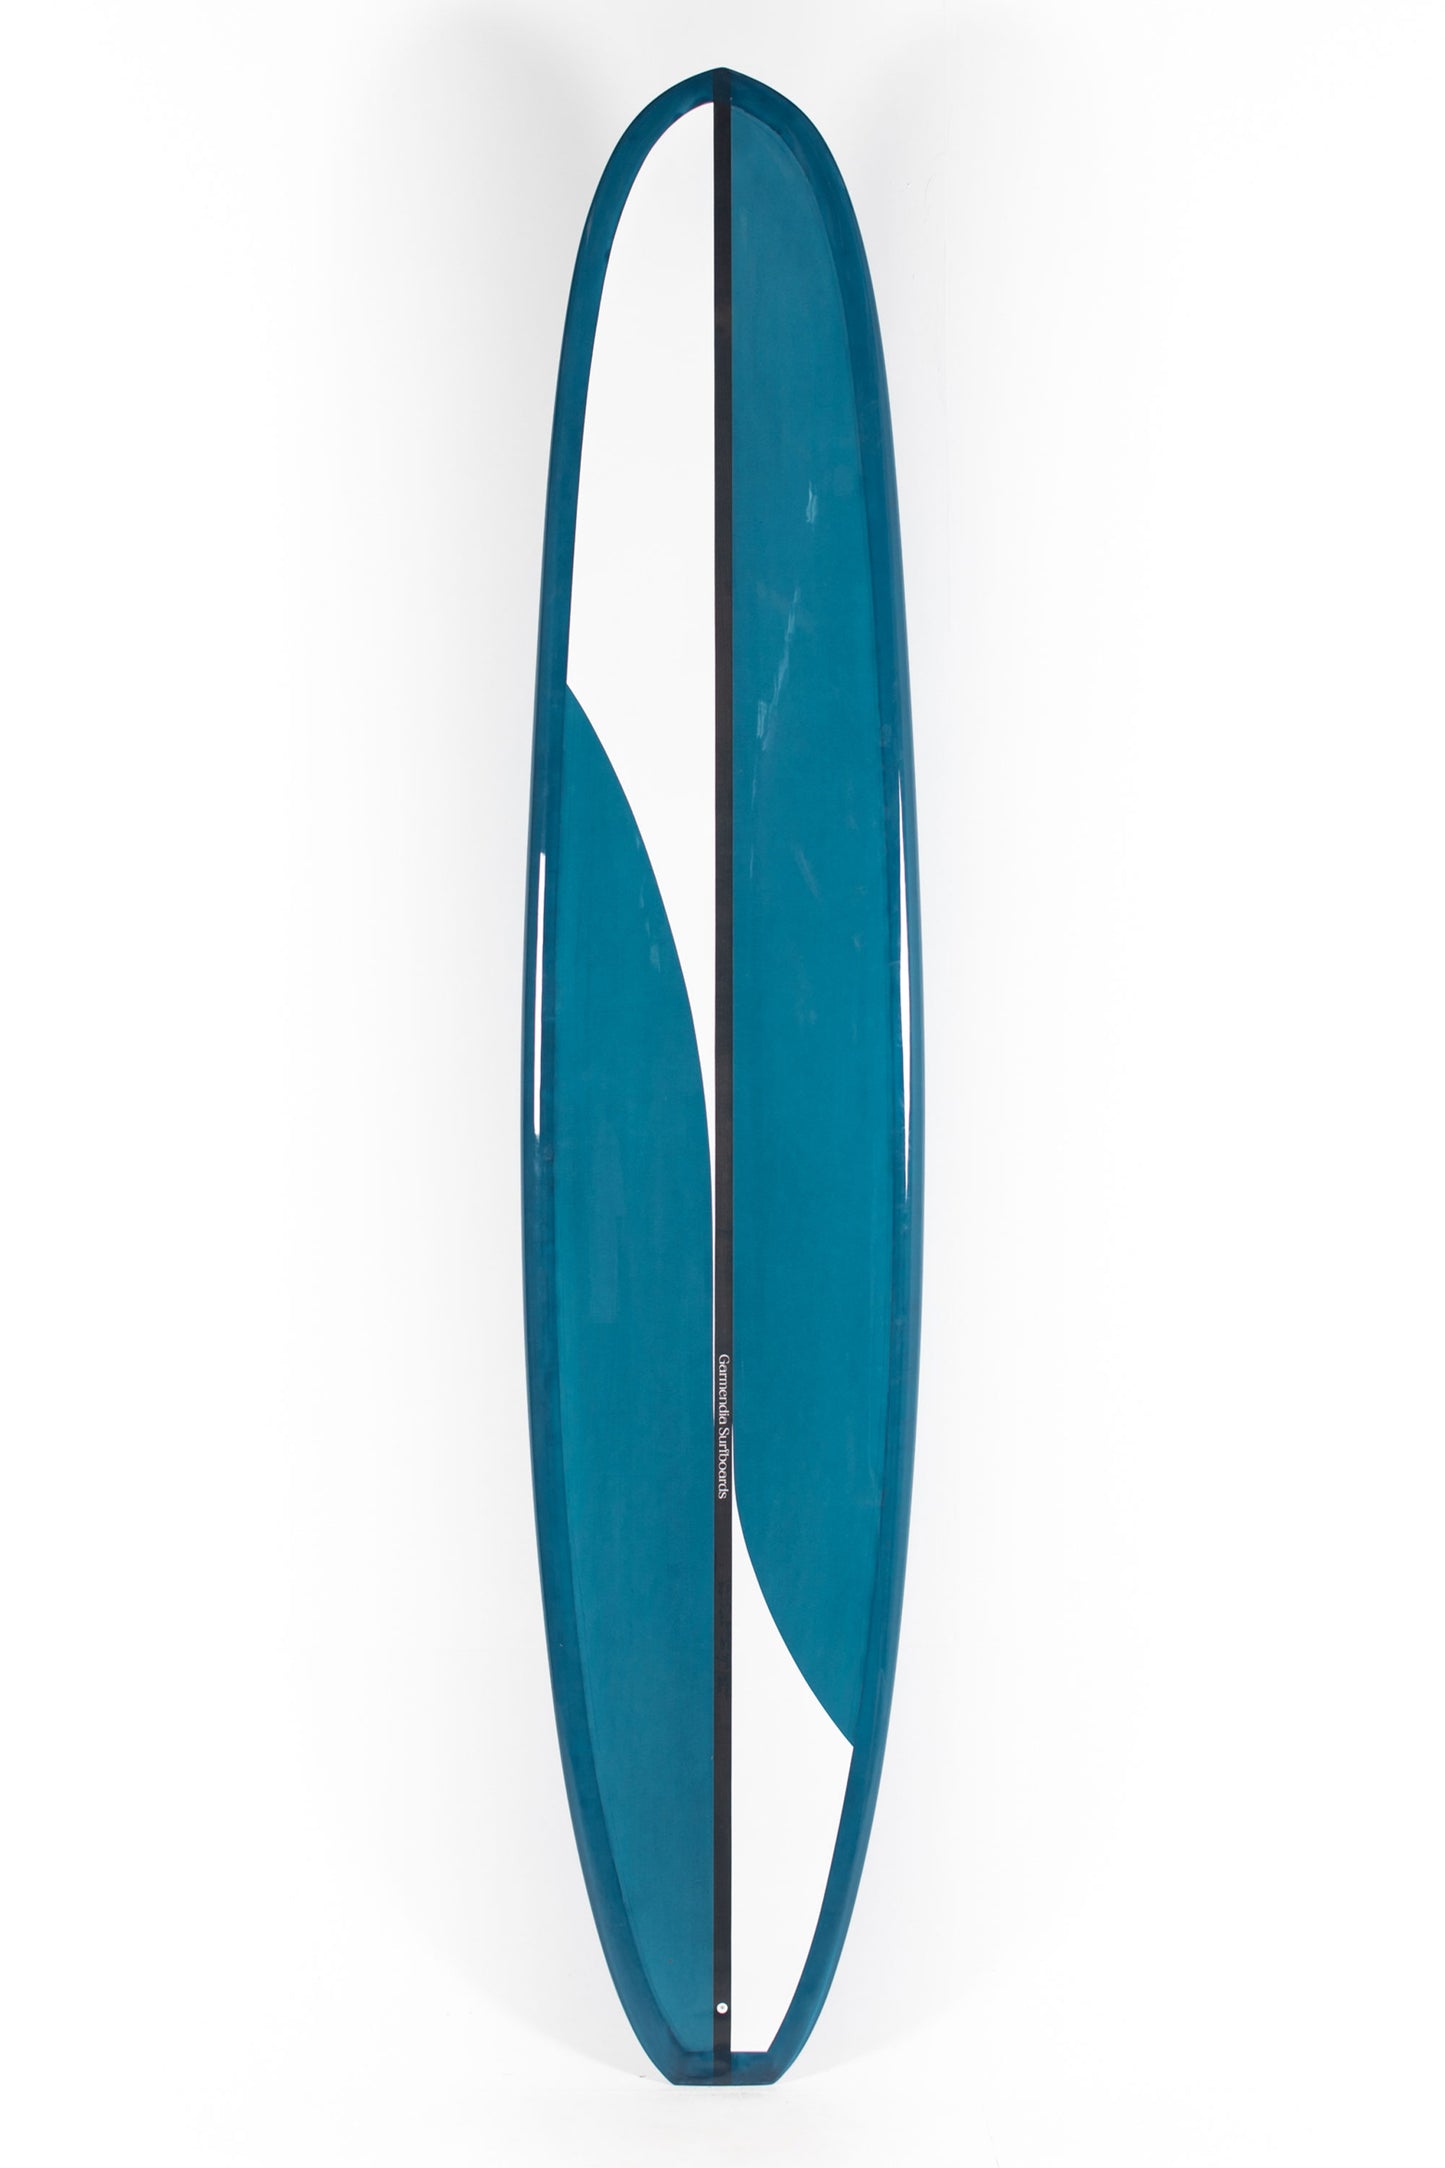 Pukas Surf Shop - Garmendia Surfboards - BULLET - 9'6" x 23 x 3 - Ref. BULLET96